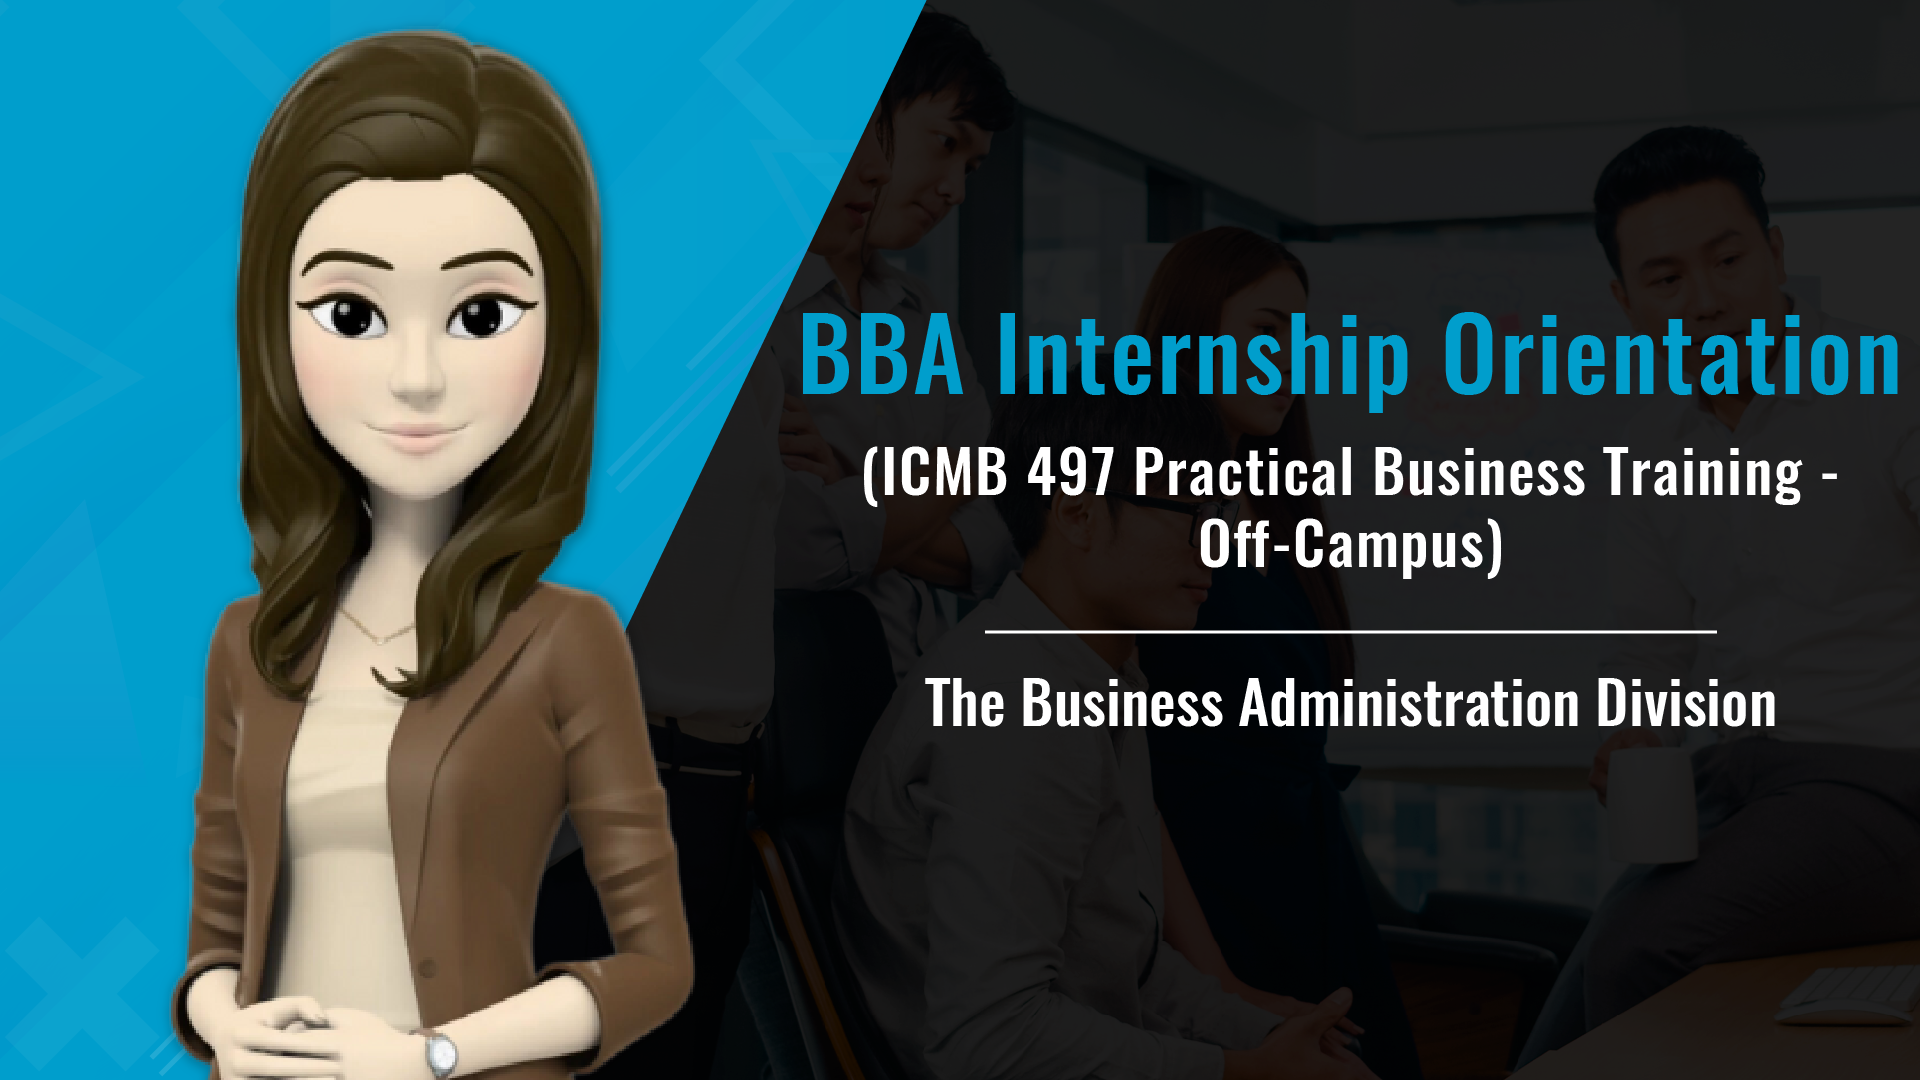 BBA Internship Orientation (ICMB 497 Practical Business Training - Off-Campus) 032